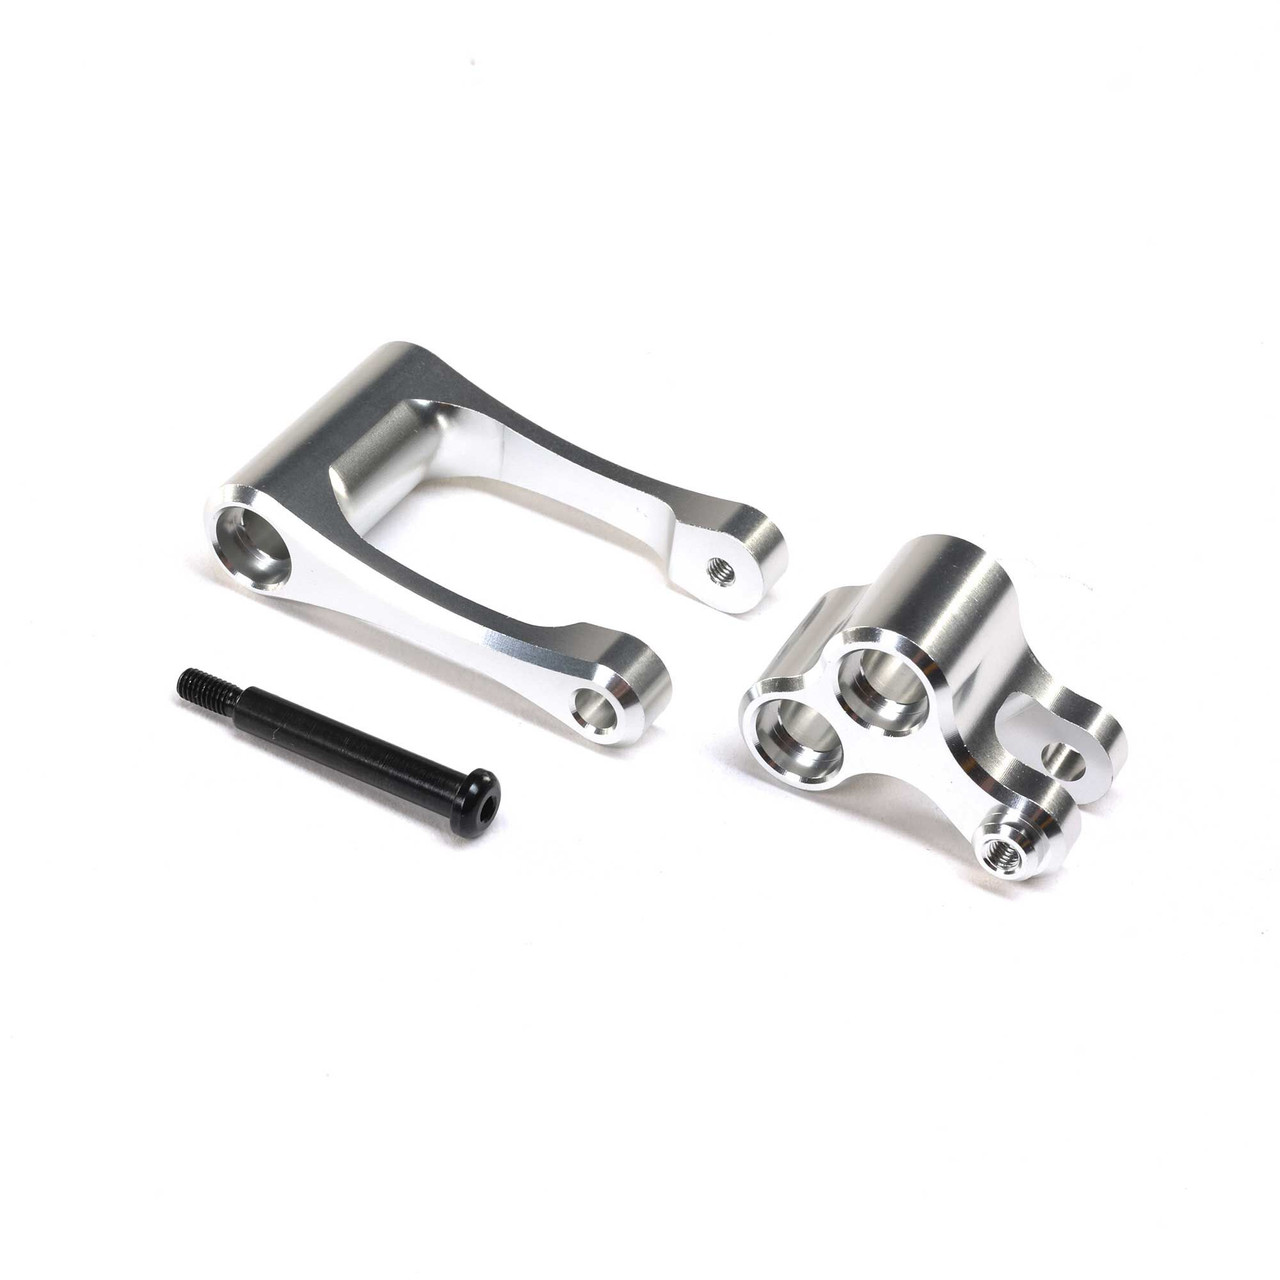 Losi Promoto-MX Aluminum Knuckle & Pull Rod, Silver